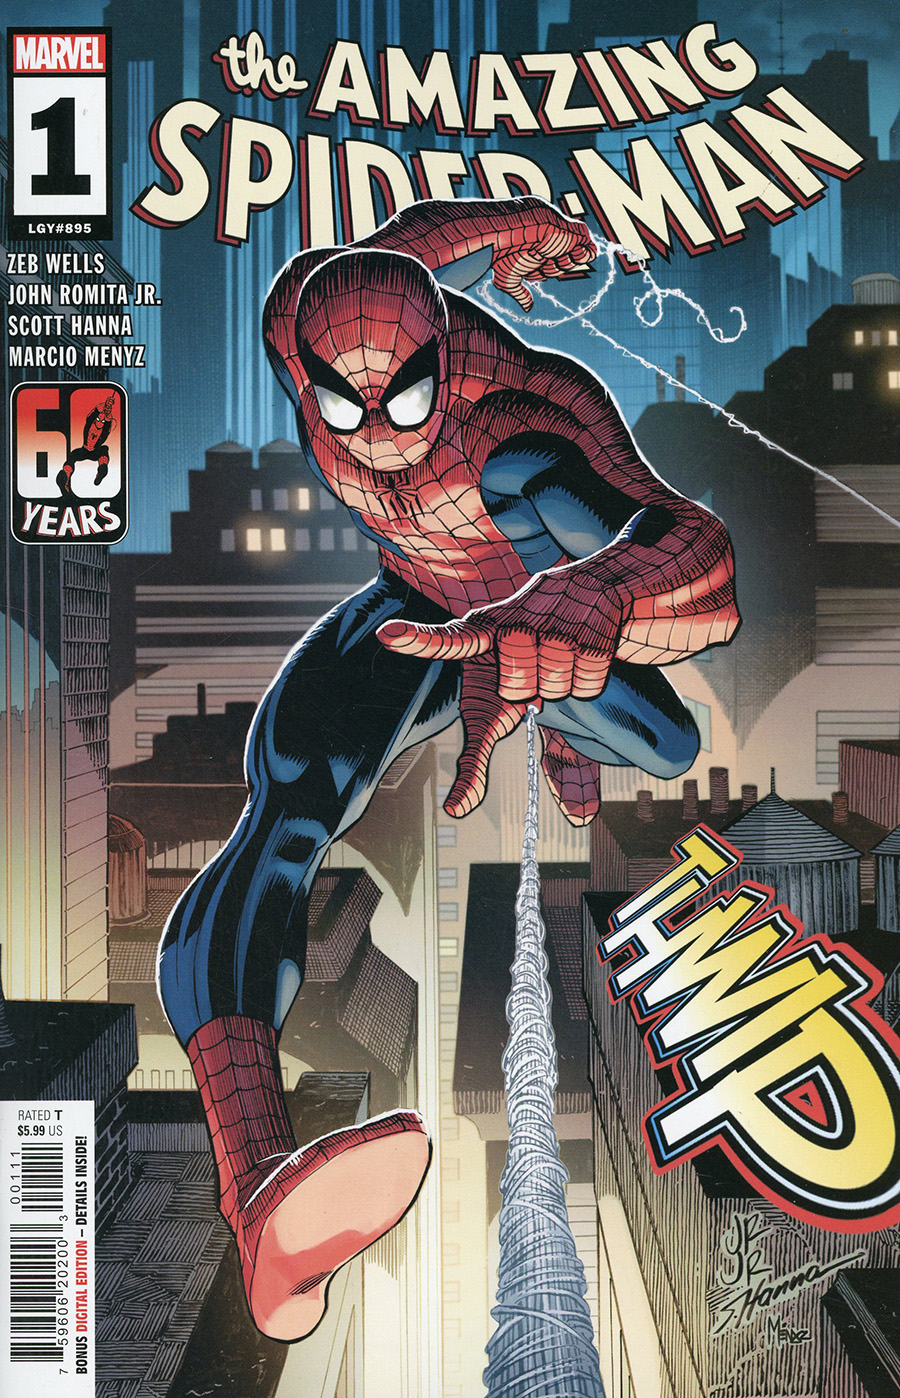 1 Spider-man Season One Marvel Comics Hard Cover HC GN Graphic Novel Book New 